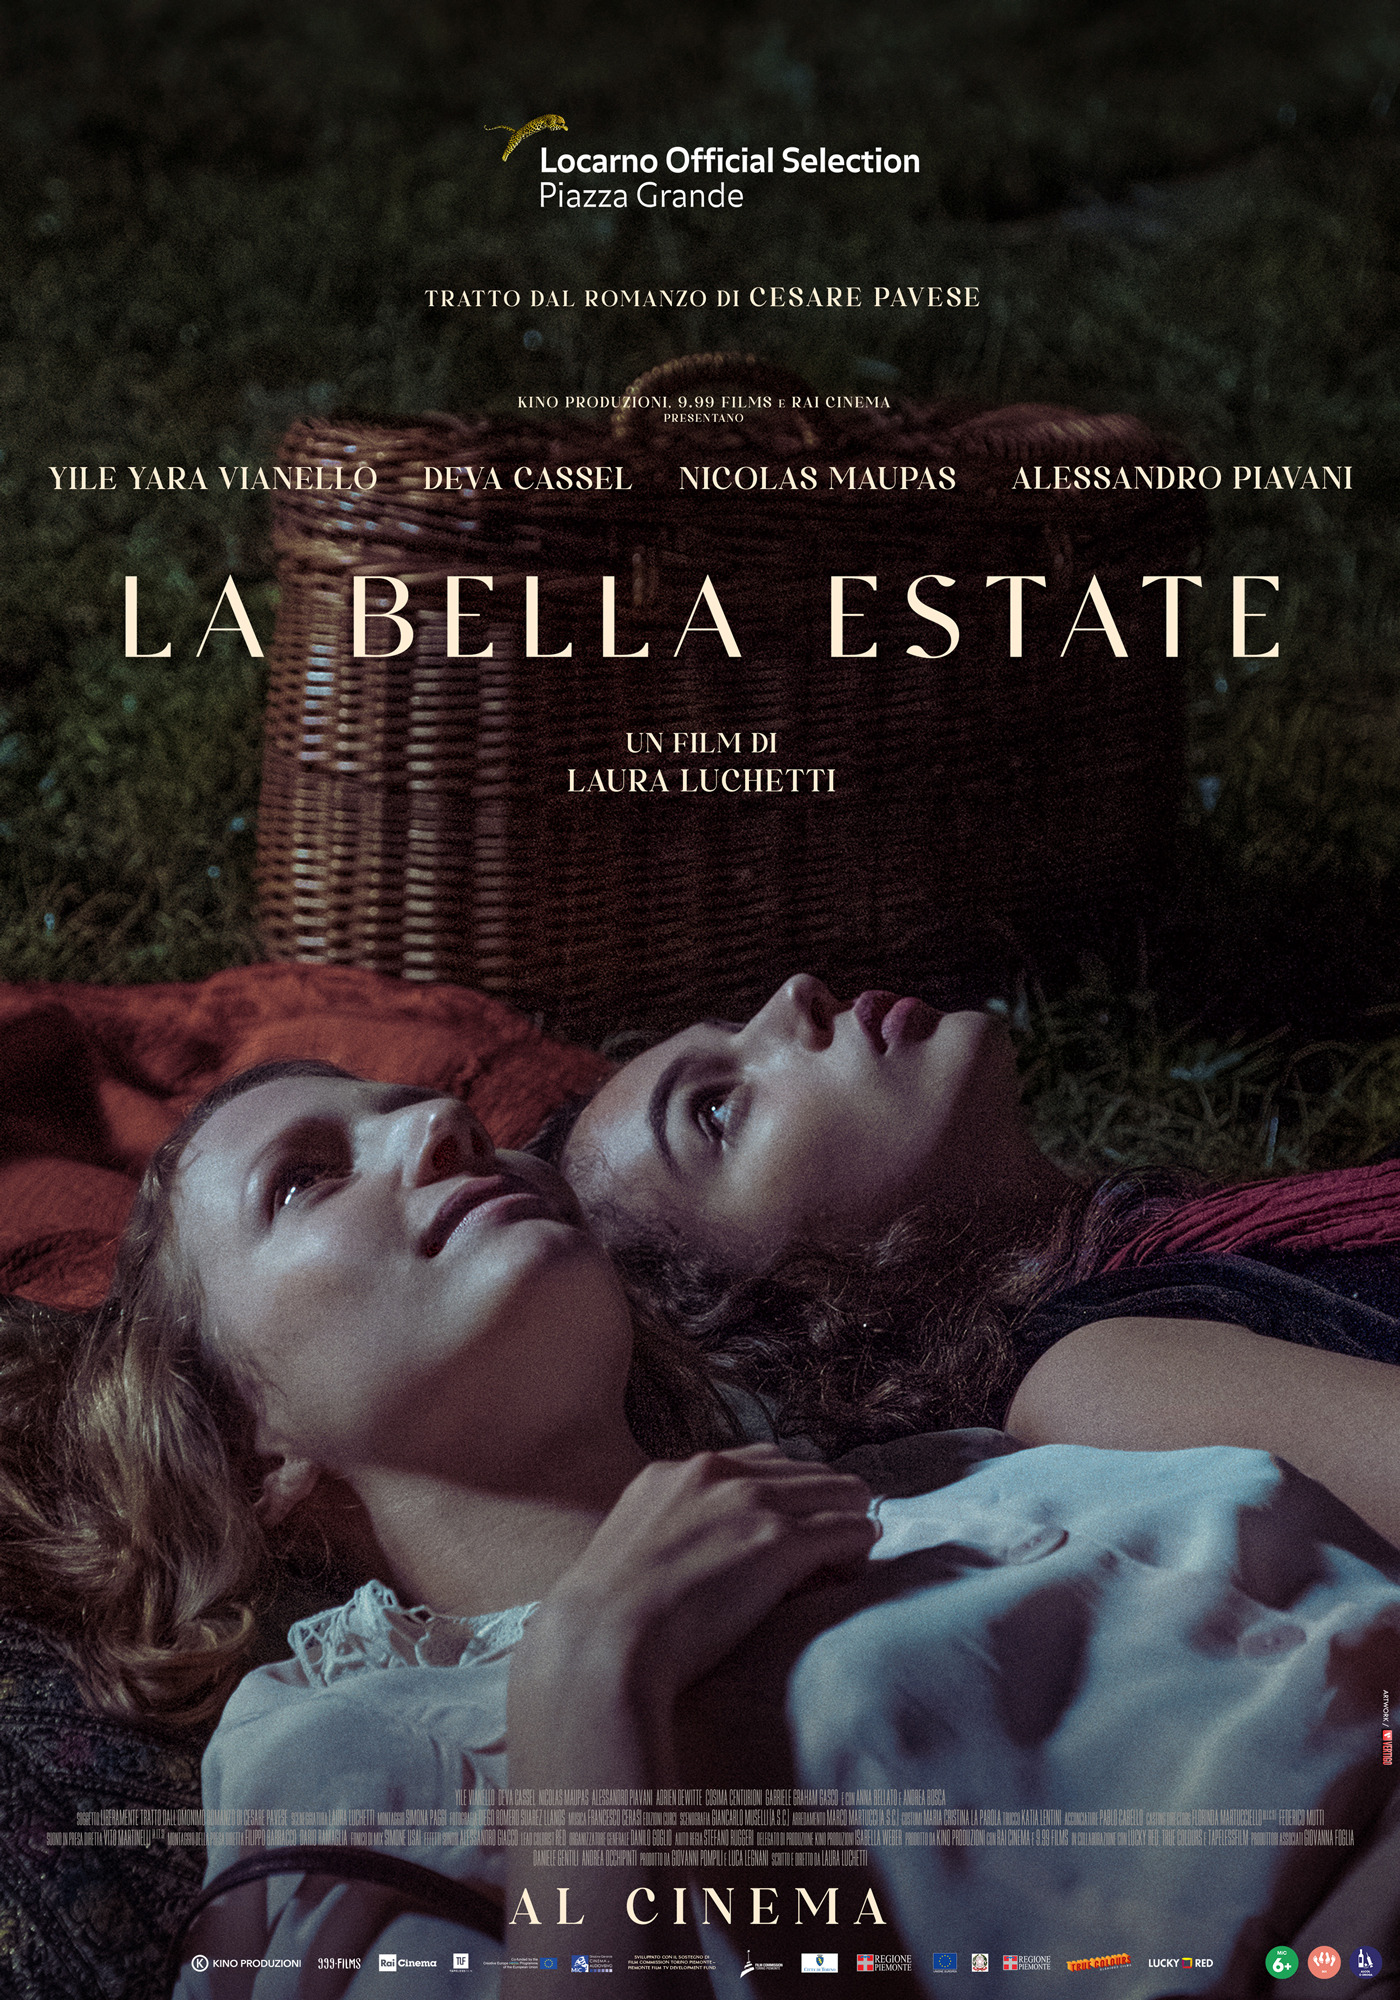 Mega Sized Movie Poster Image for La bella estate (#2 of 2)